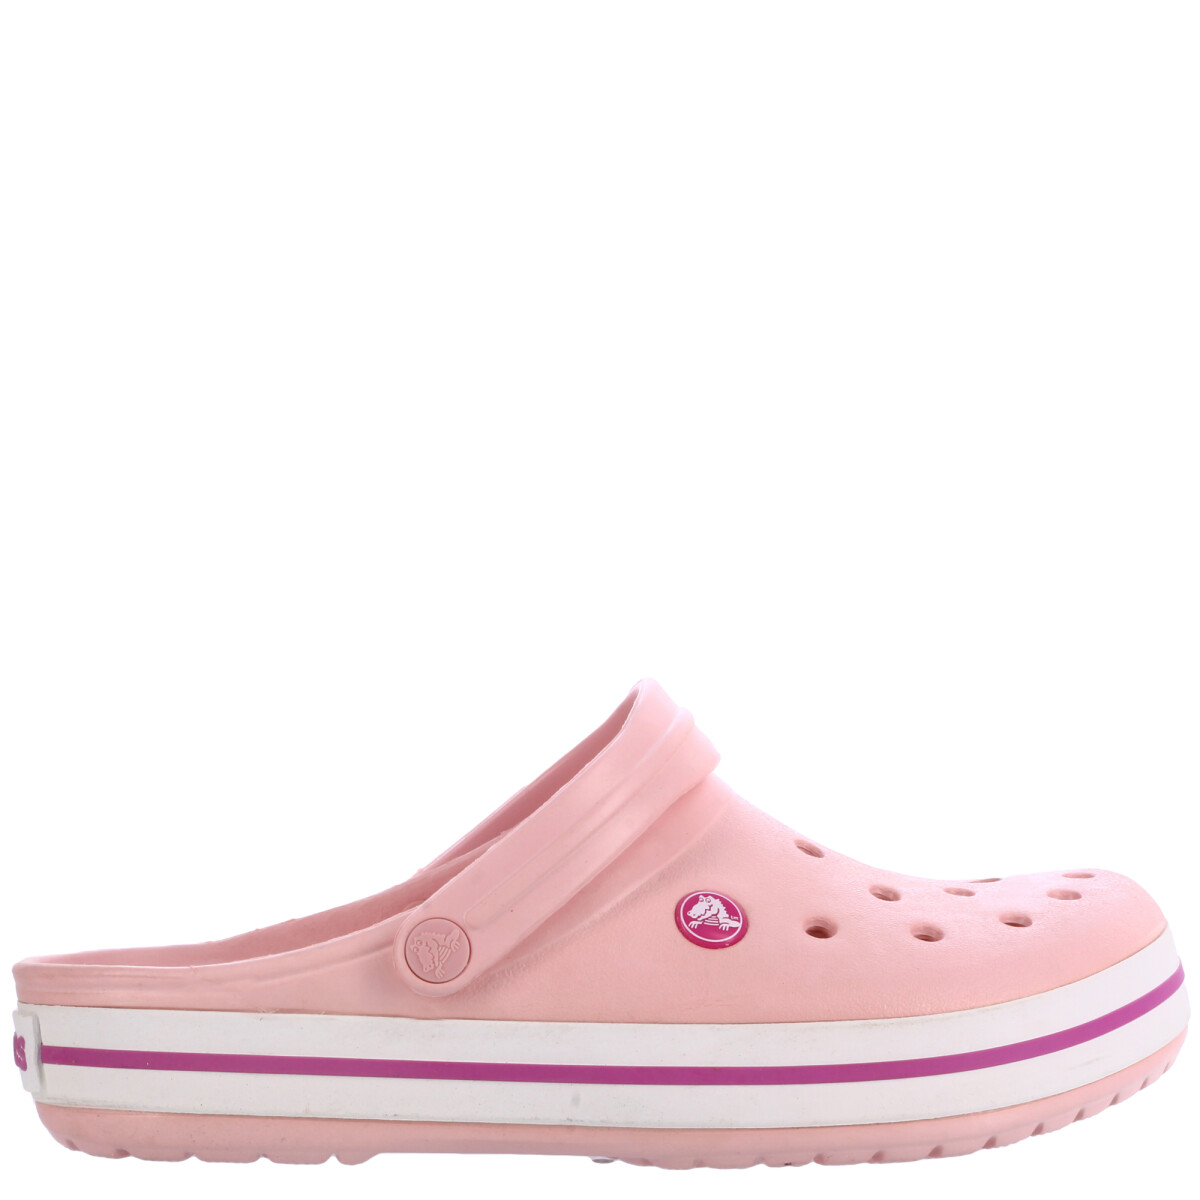 Zueco Crocband Crocs - Pink/Orquidea 